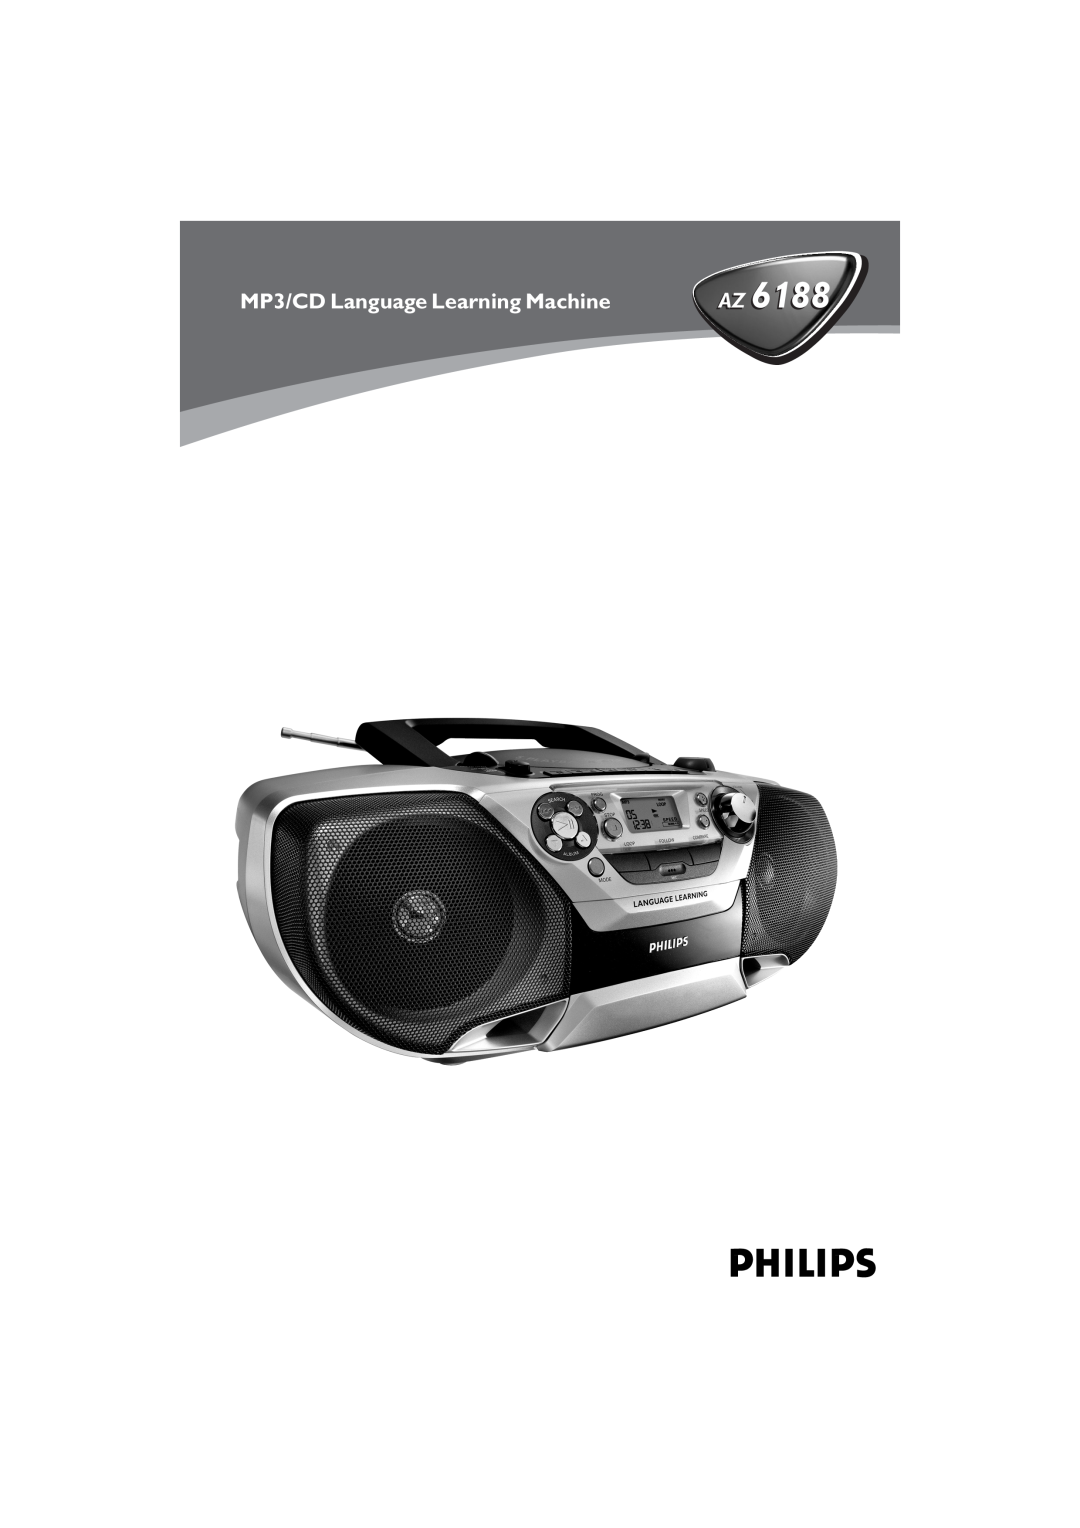 Philips AZ 6188 manual MP3/CD Language Learning Machine 